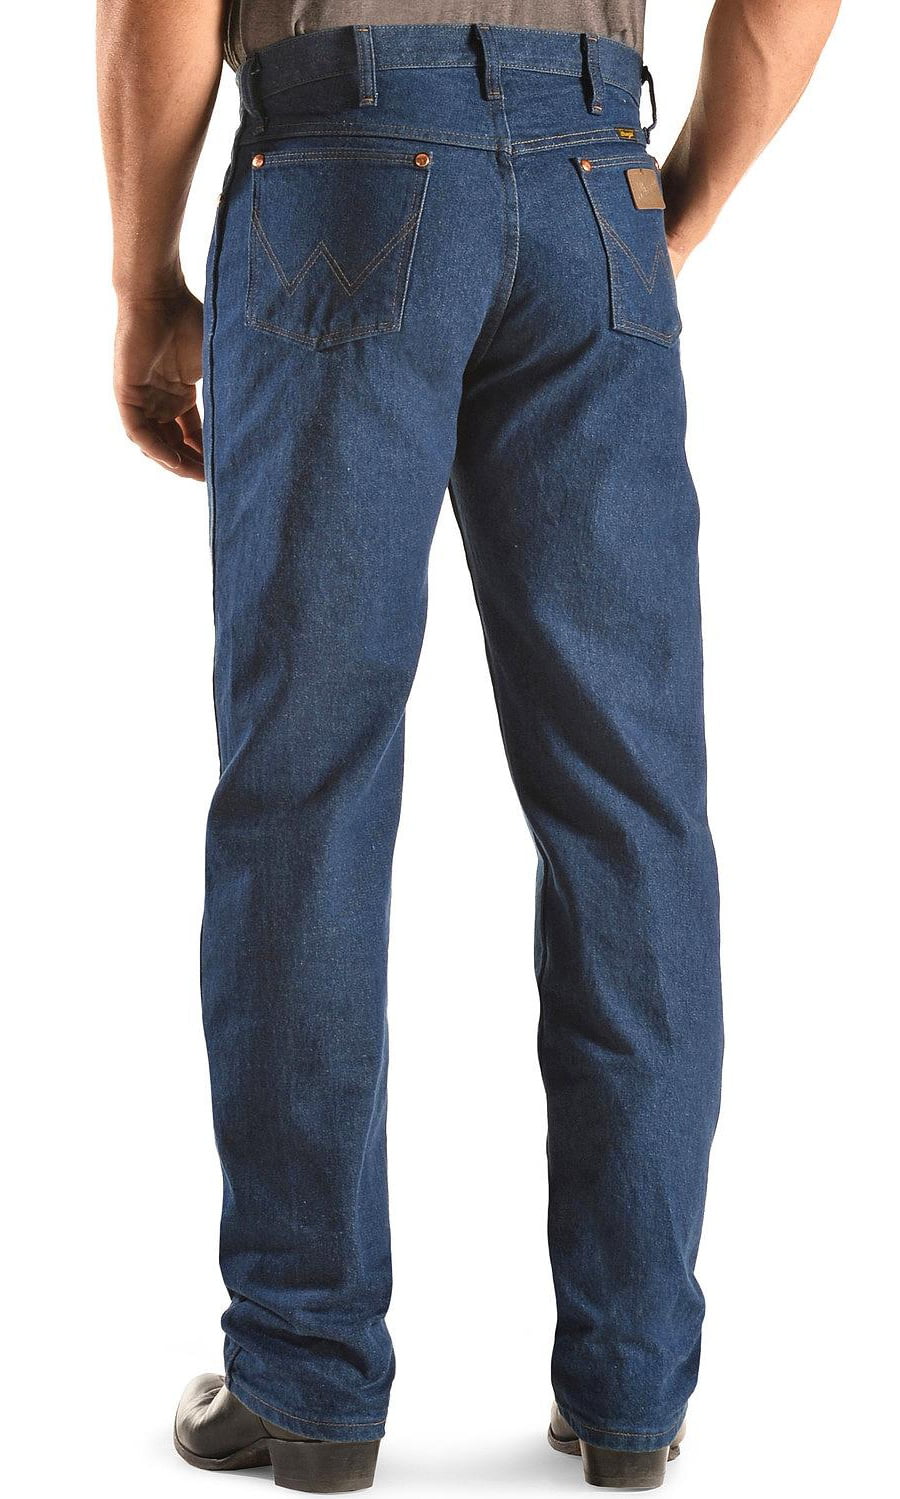 Wrangler - wrangler men's jeans 13mwz original fit prewashed denim